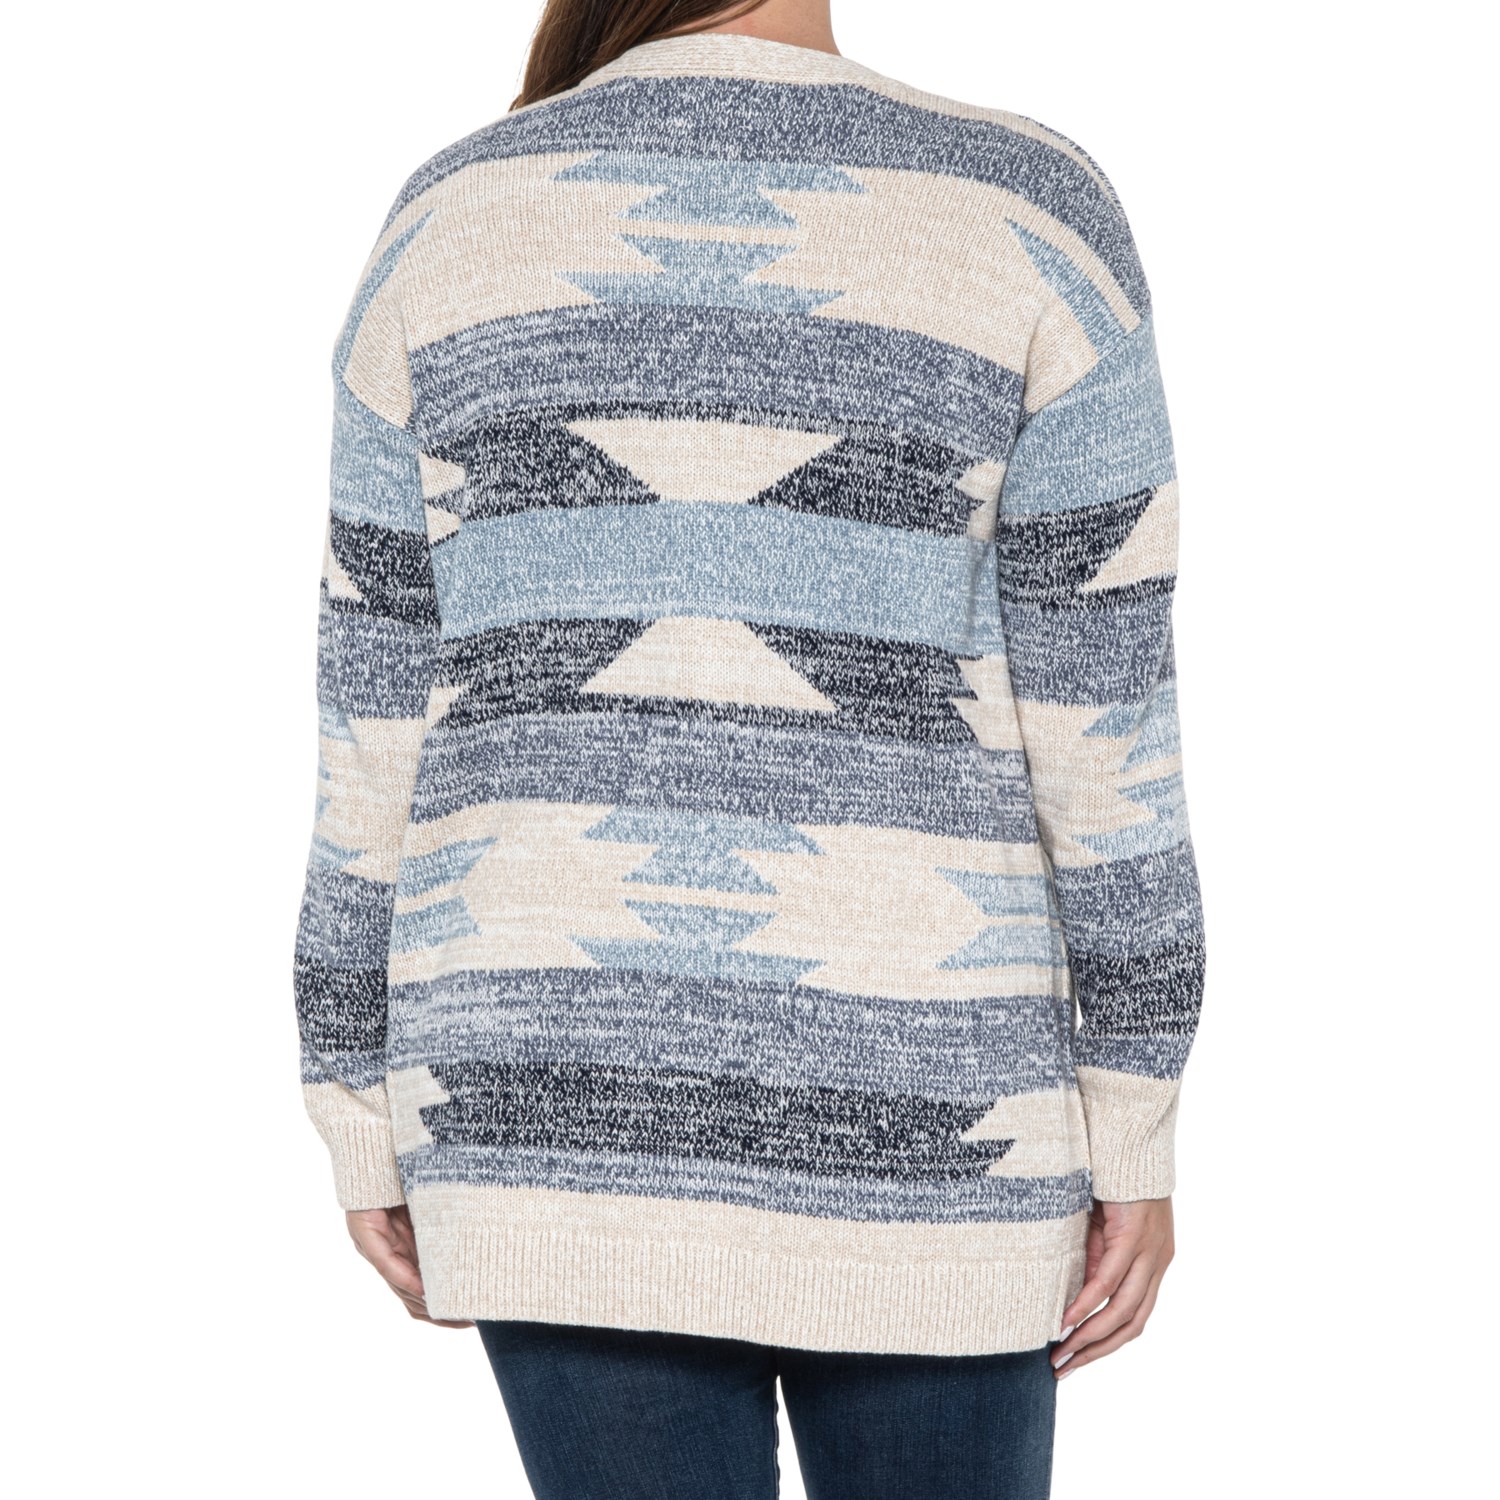 Rock Intarsia Sweater Pale Blue - Women's sweater